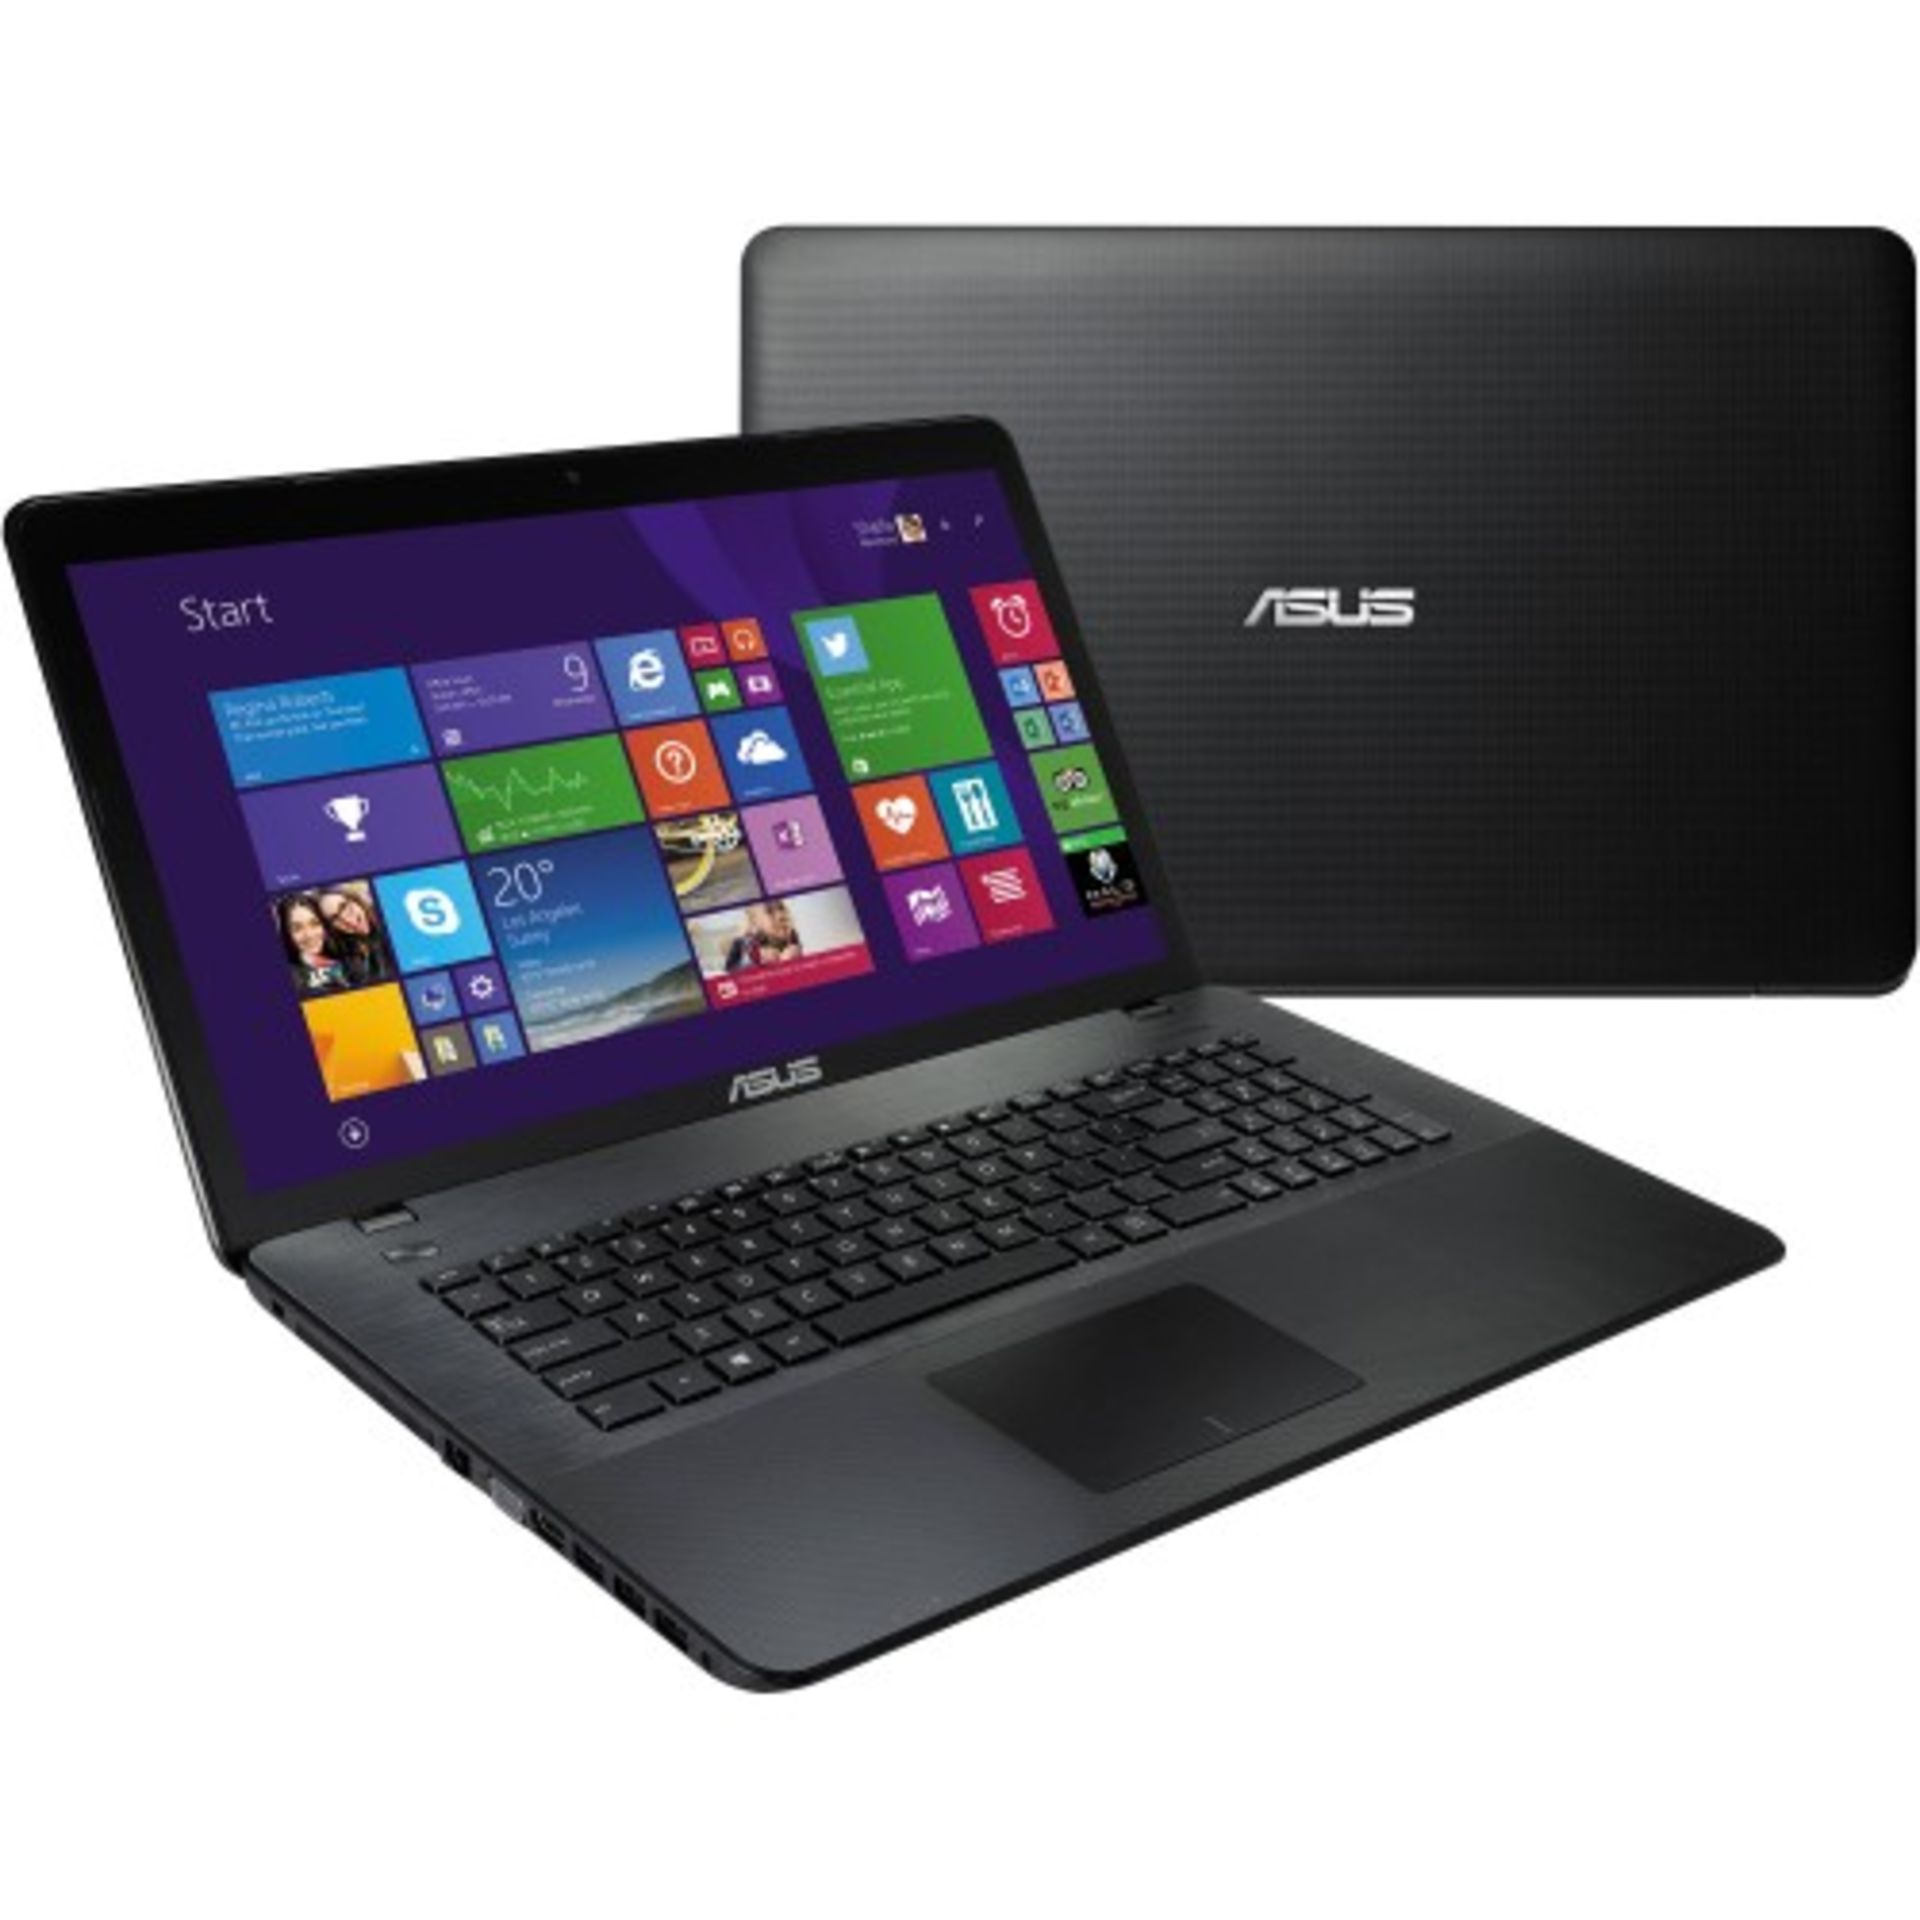 V Grade A Asus Laptop Intel i5 Processor Windows 8.1 2GB RAM 1TB - Black